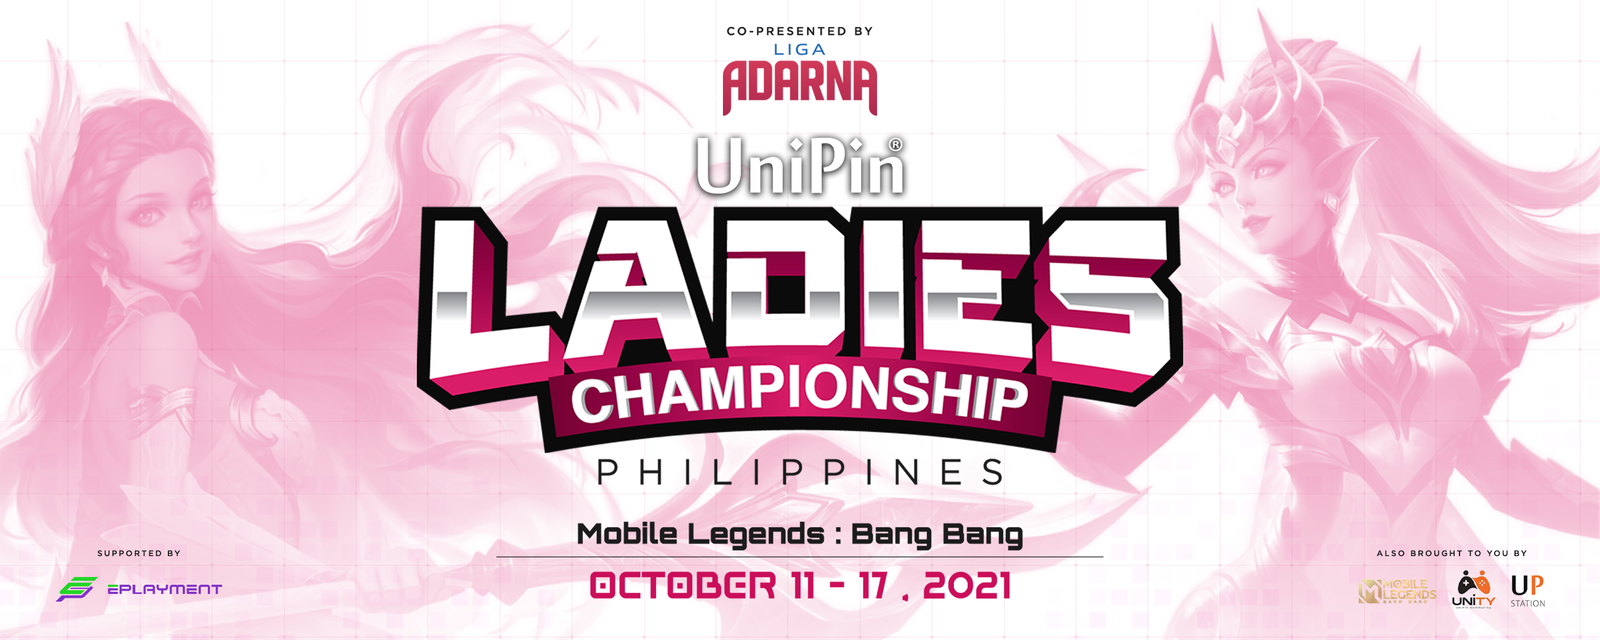 UniPin Ladies Championship